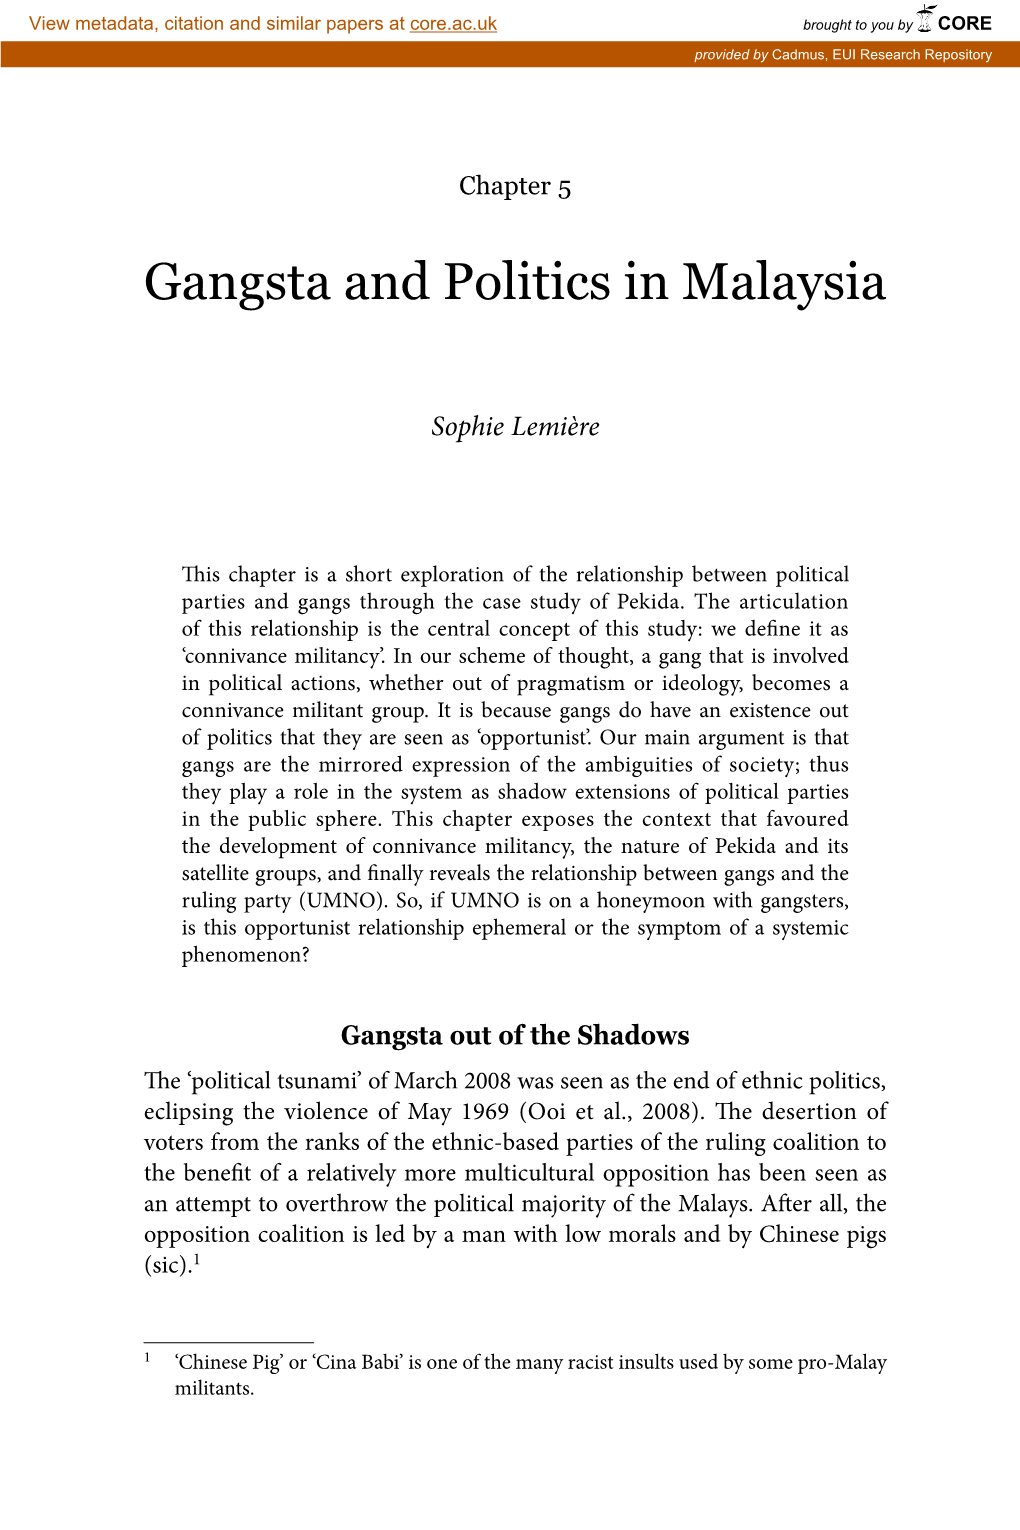 Gangsta and Politics in Malaysia